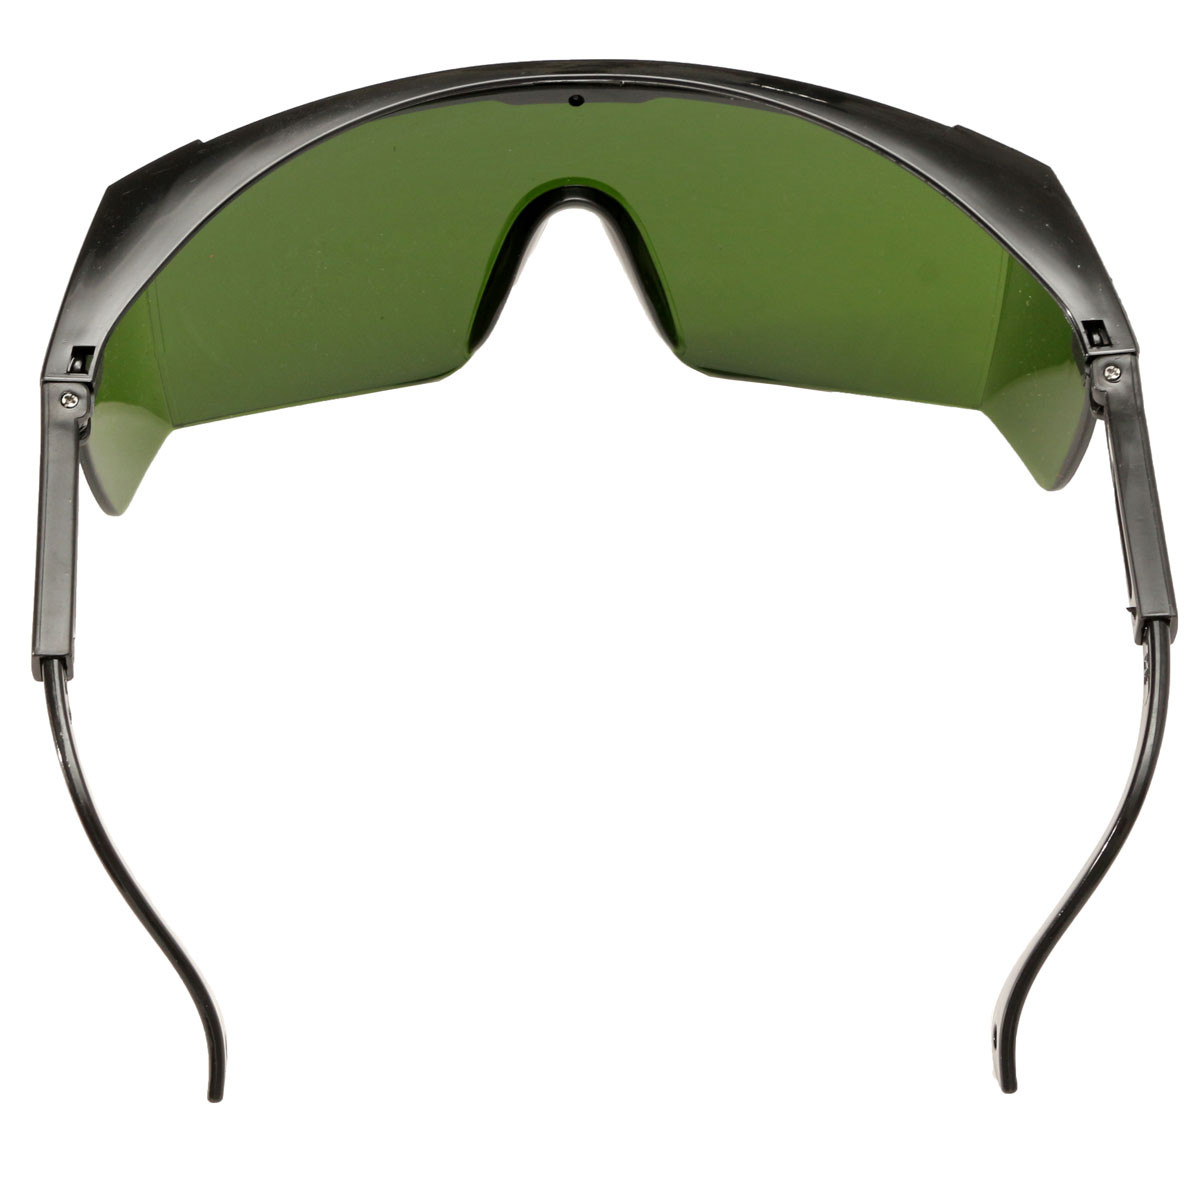 360nm-1064nm Laser Protection Goggles Glasses IPL-2 OD+4D For Laser 13